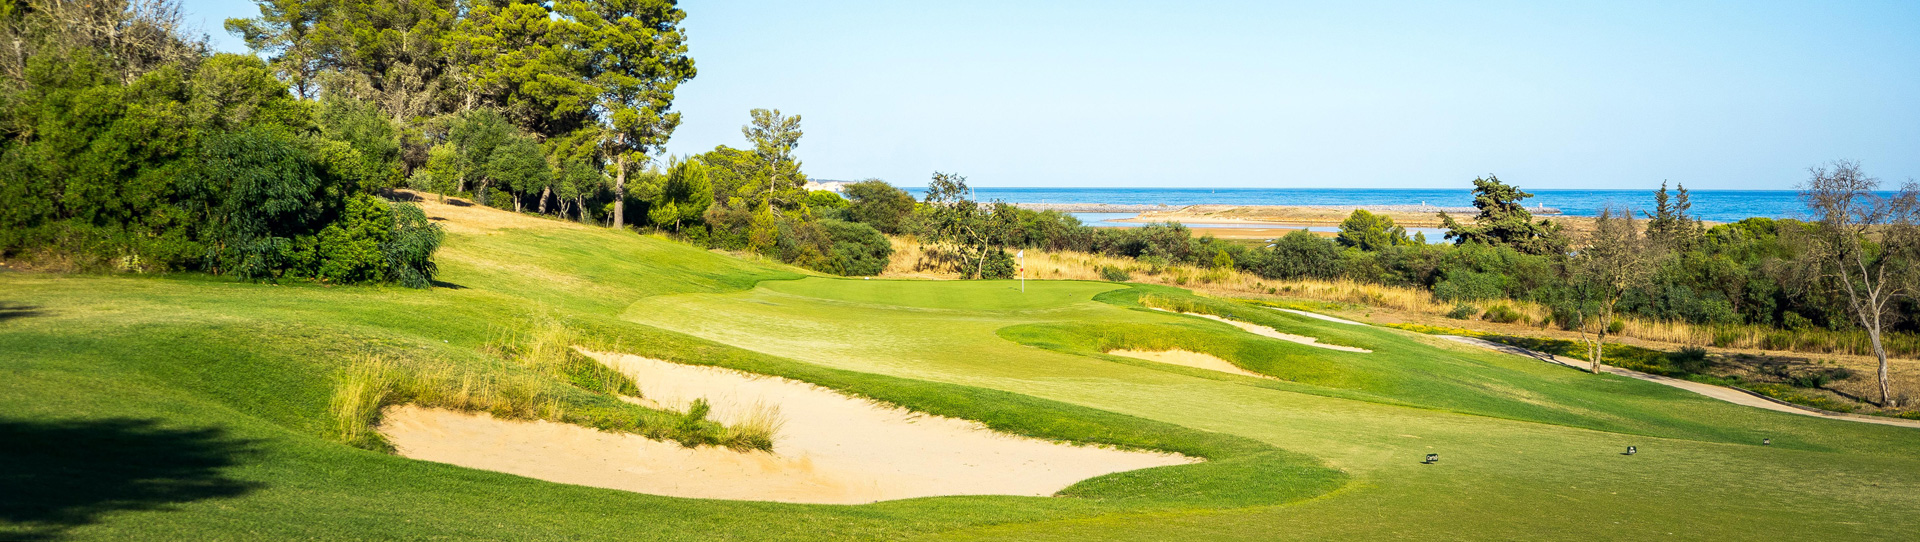 Portugal golf holidays - Amendoeira & Palmares Full Experience - Photo 1